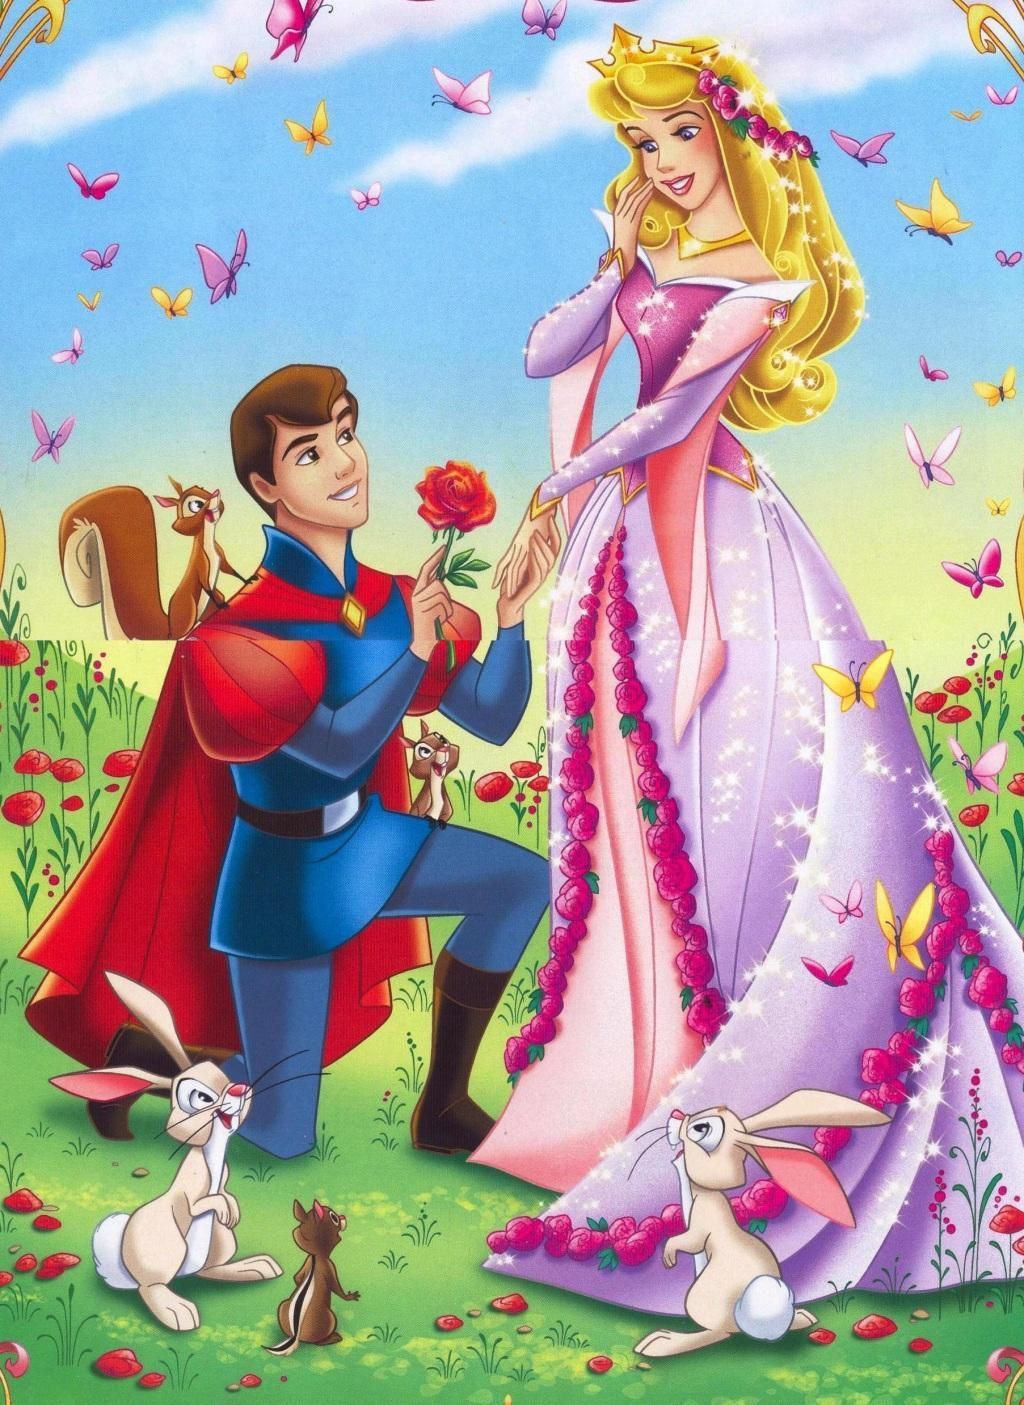 Princess Aurora And Prince Philip Disney Couples. Disney princess picture, Disney princess wallpaper, Prince philip disney